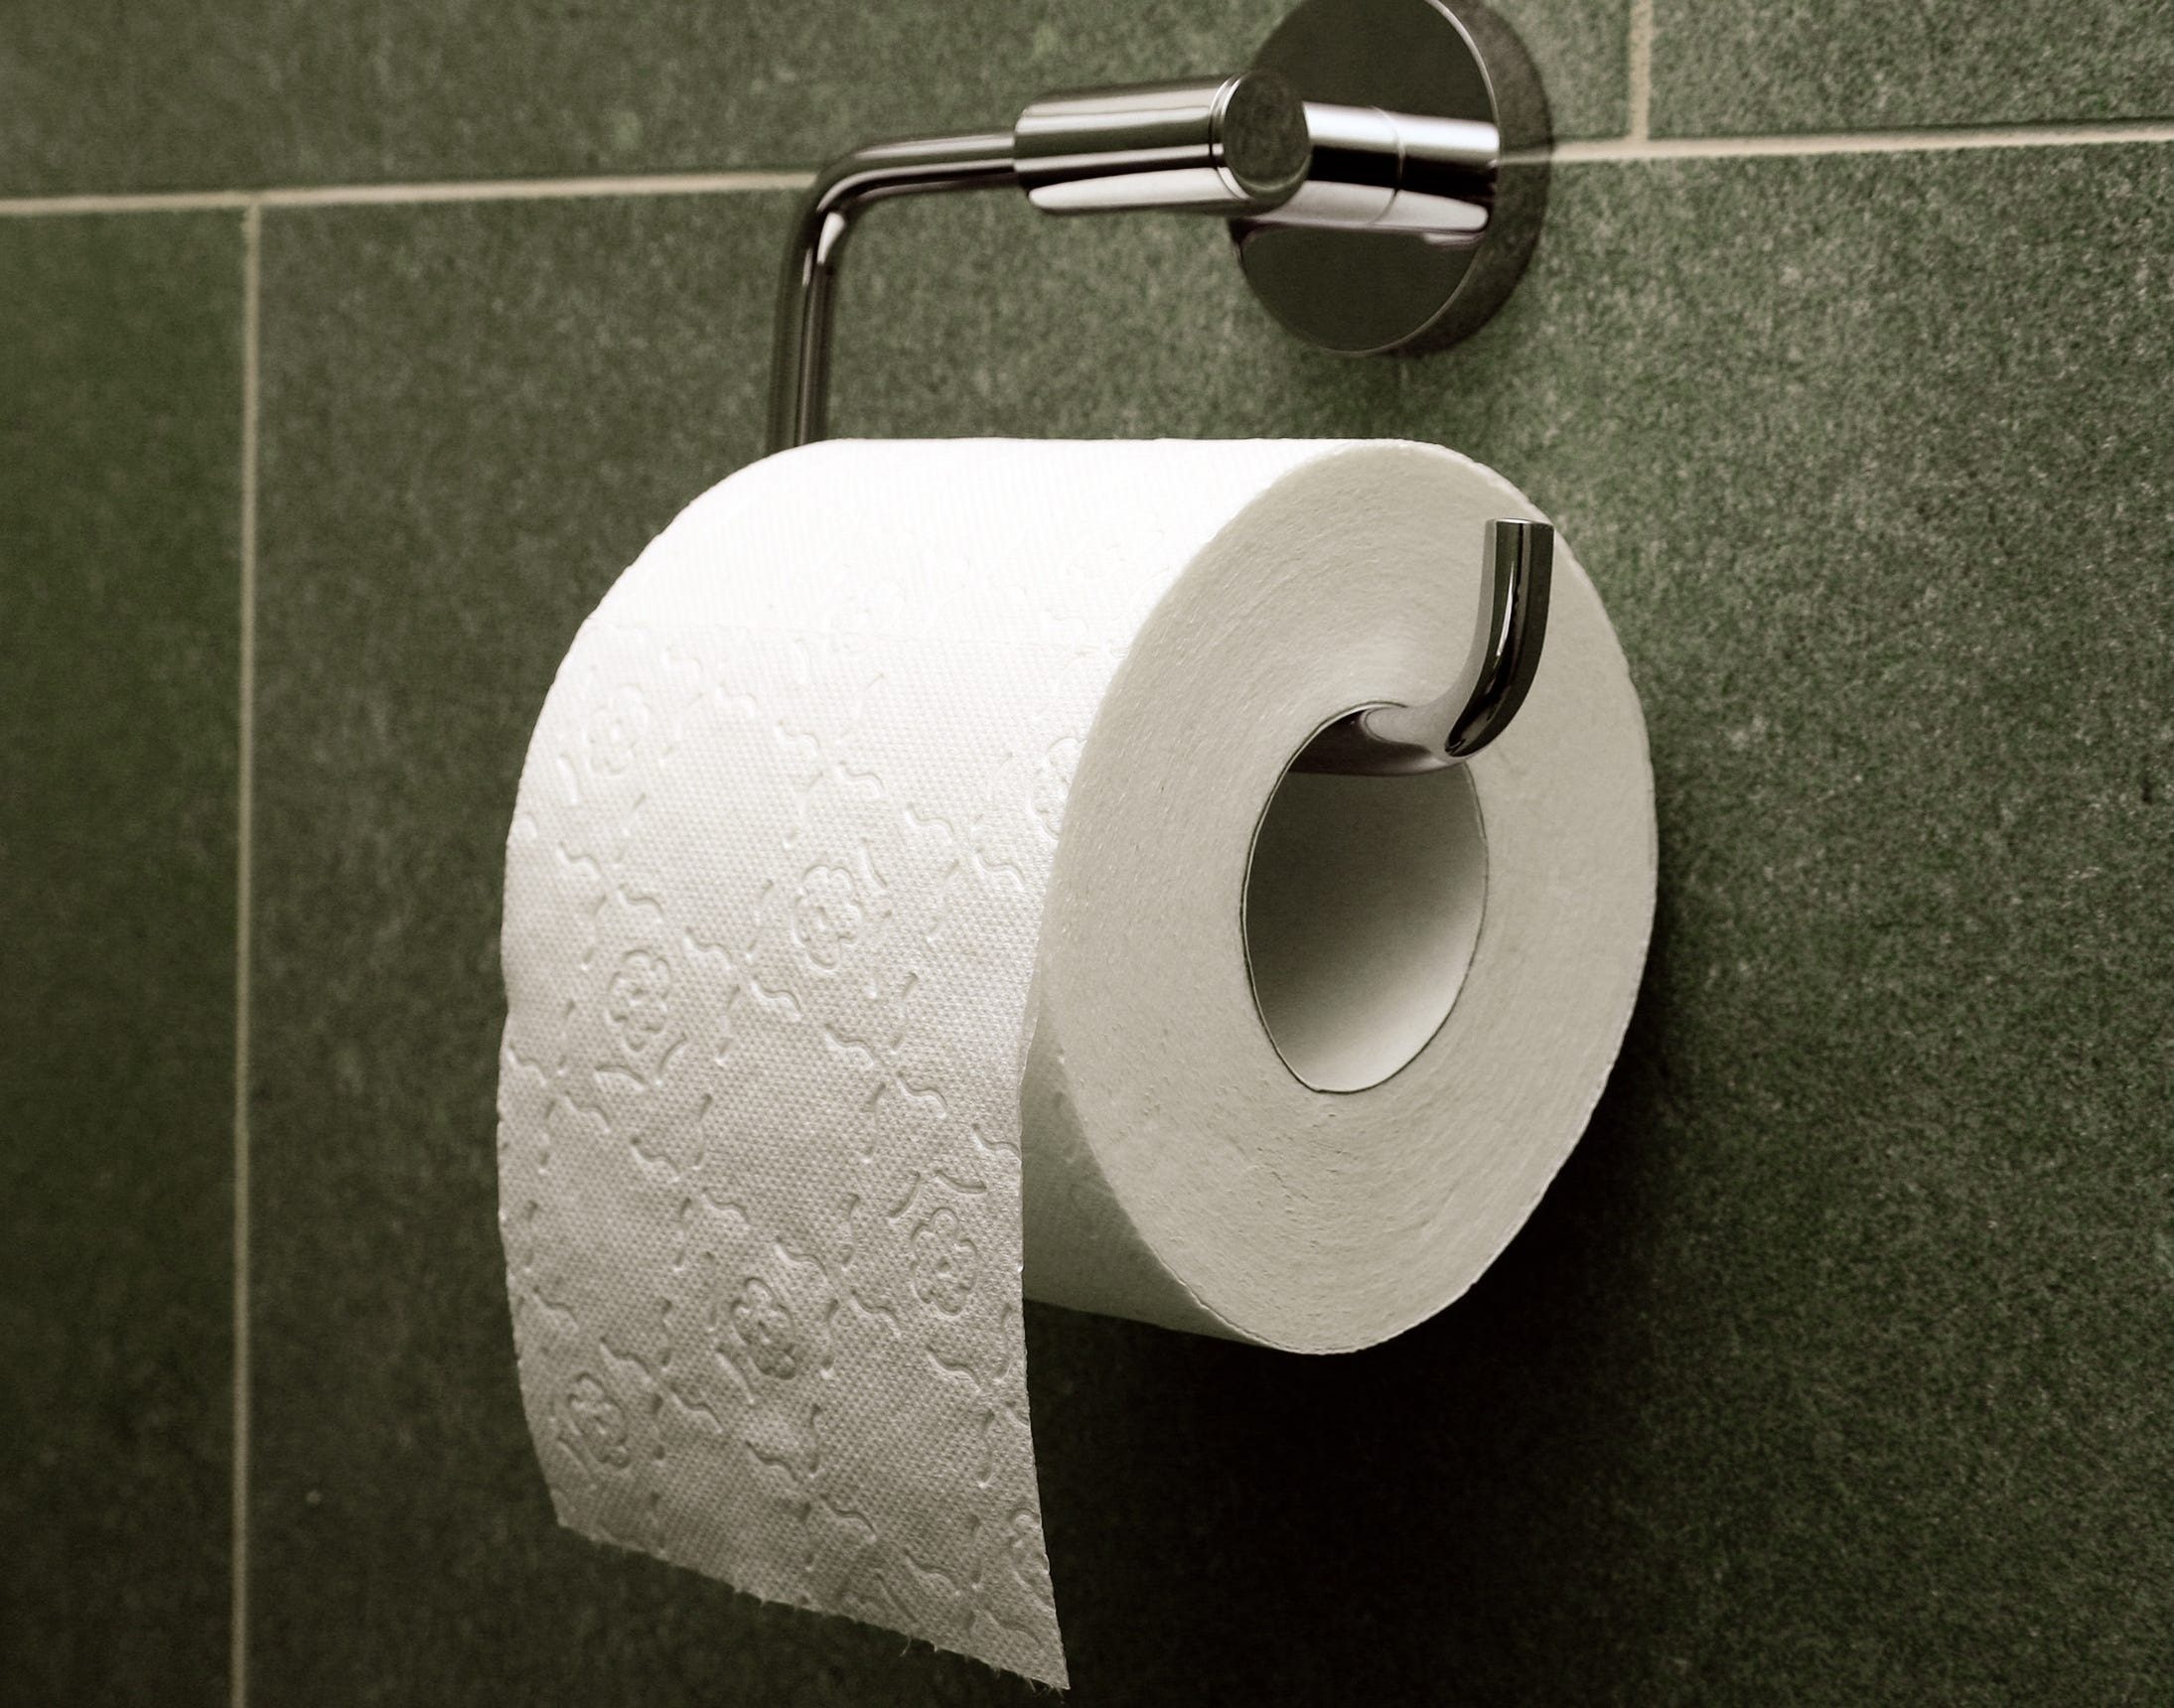 Медики умоляют отказаться от туалетной бумаги: причина удивит ➤ Prozoro.net.ua